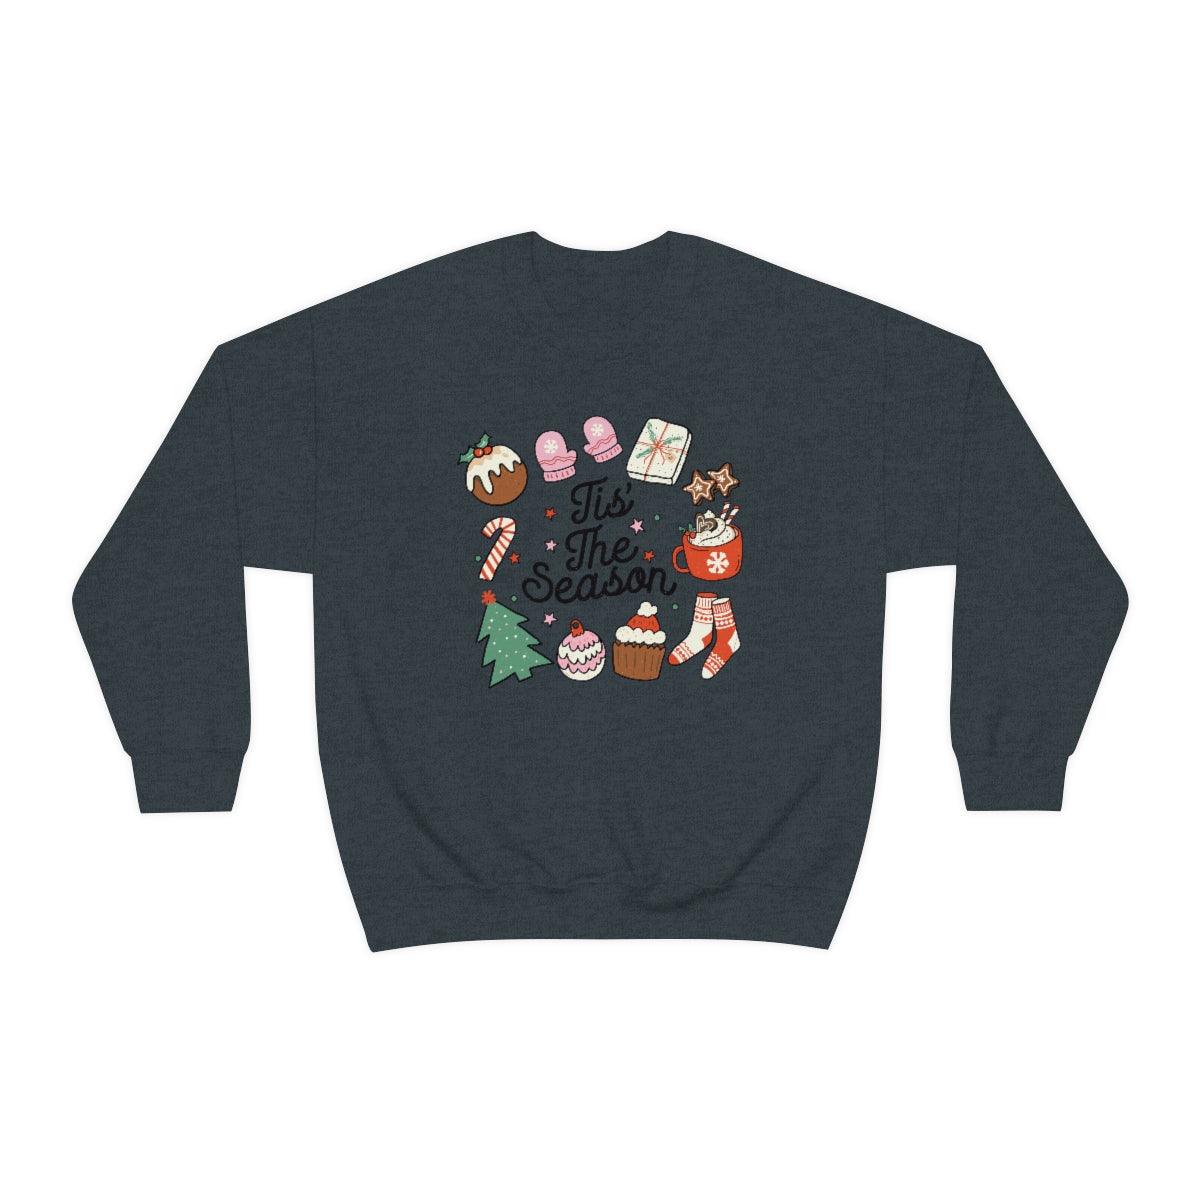 Tis The Season Christmas Crewneck Sweater - Crystal Rose Design Co.